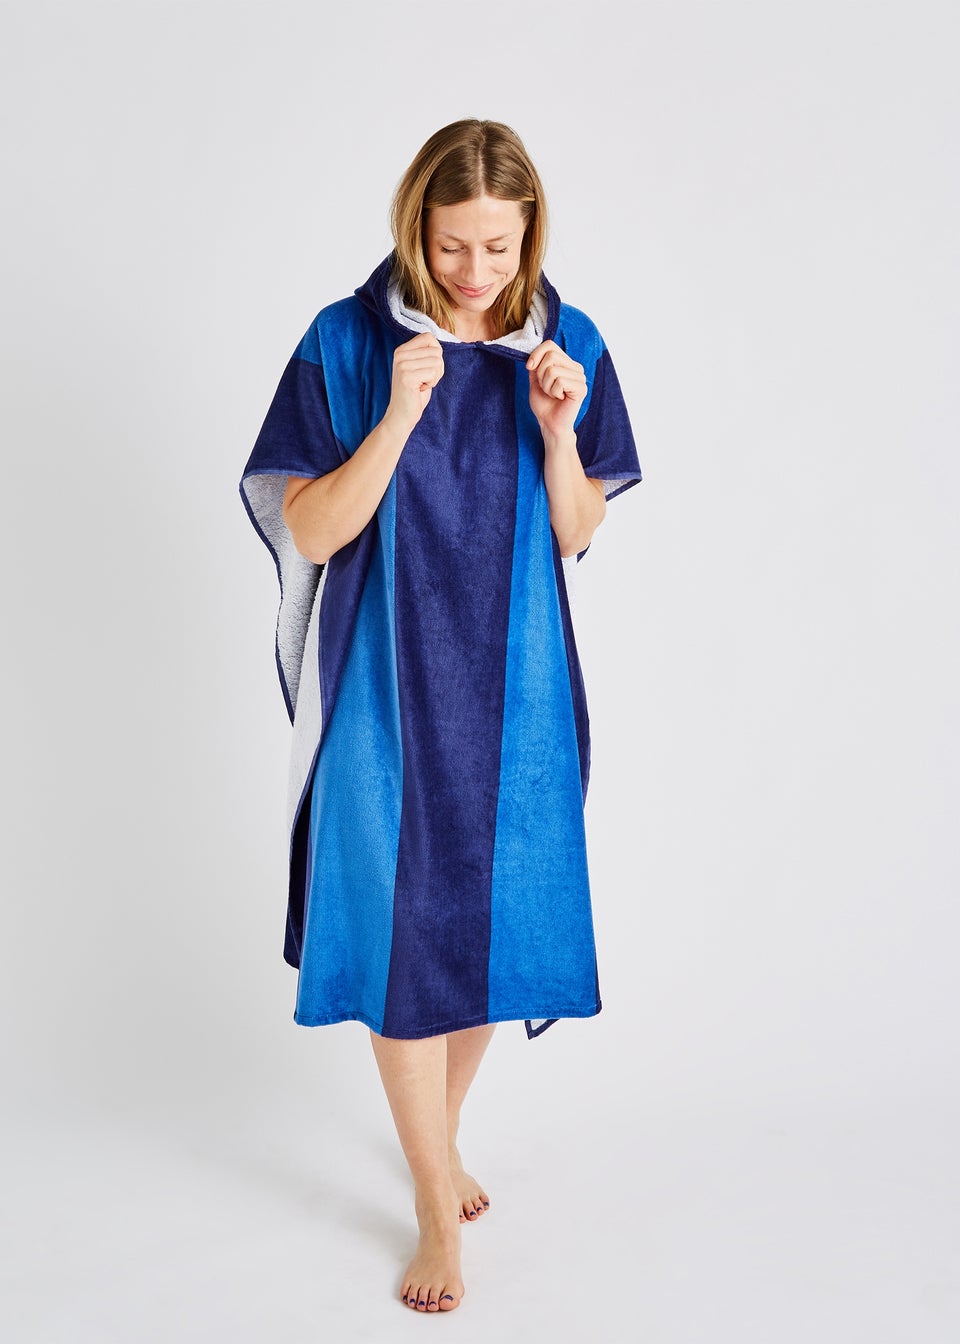 Catherine Lansfield Blue Stripe Hooded Towel Poncho